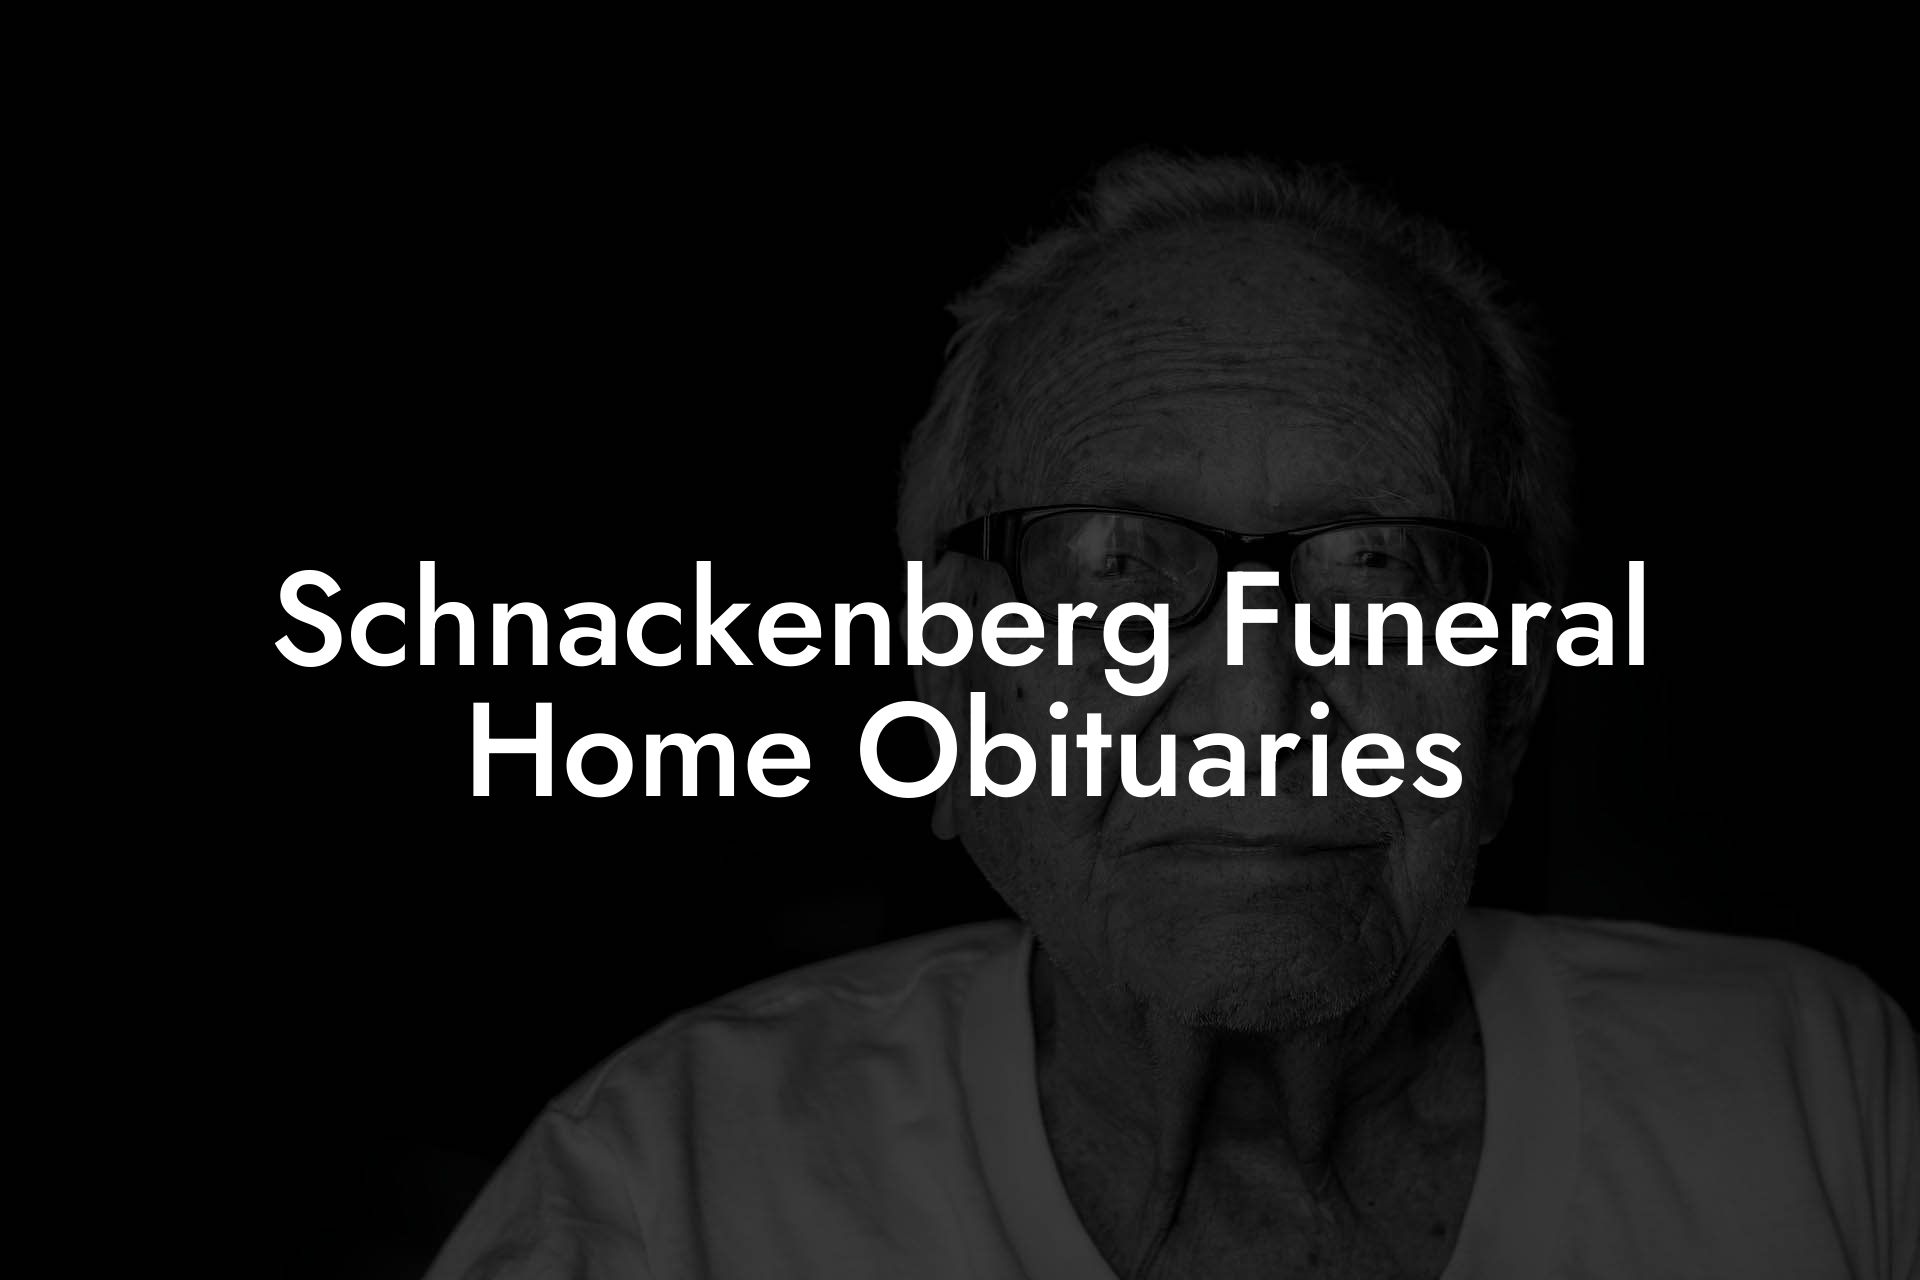 Schnackenberg Funeral Home Obituaries